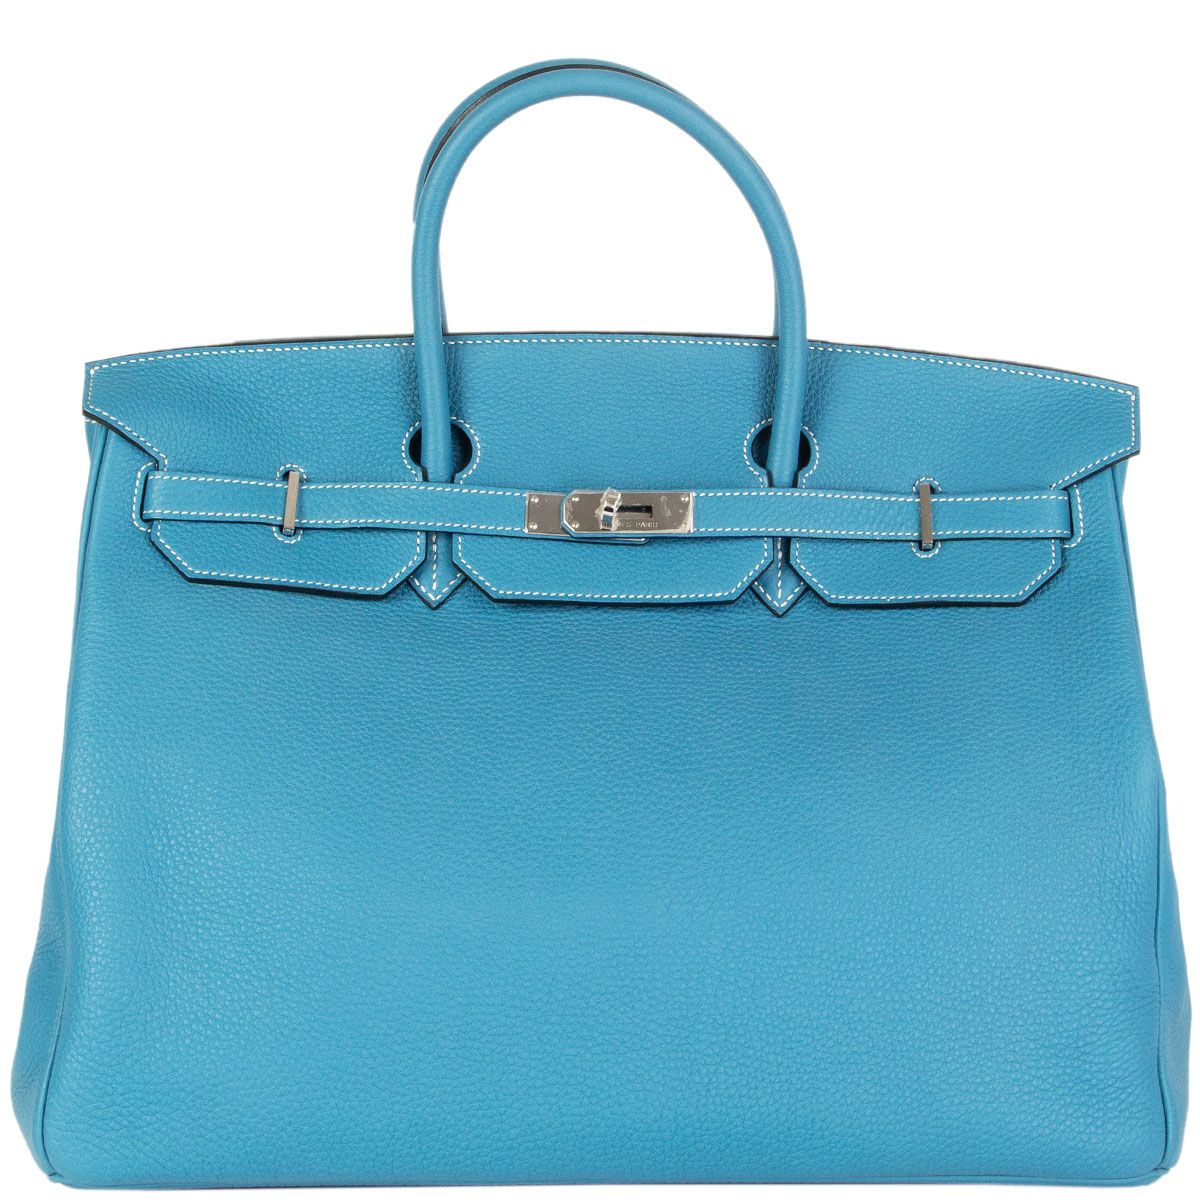 Hermès Blue Royal Togo Birkin 40 QGB0H532BB003